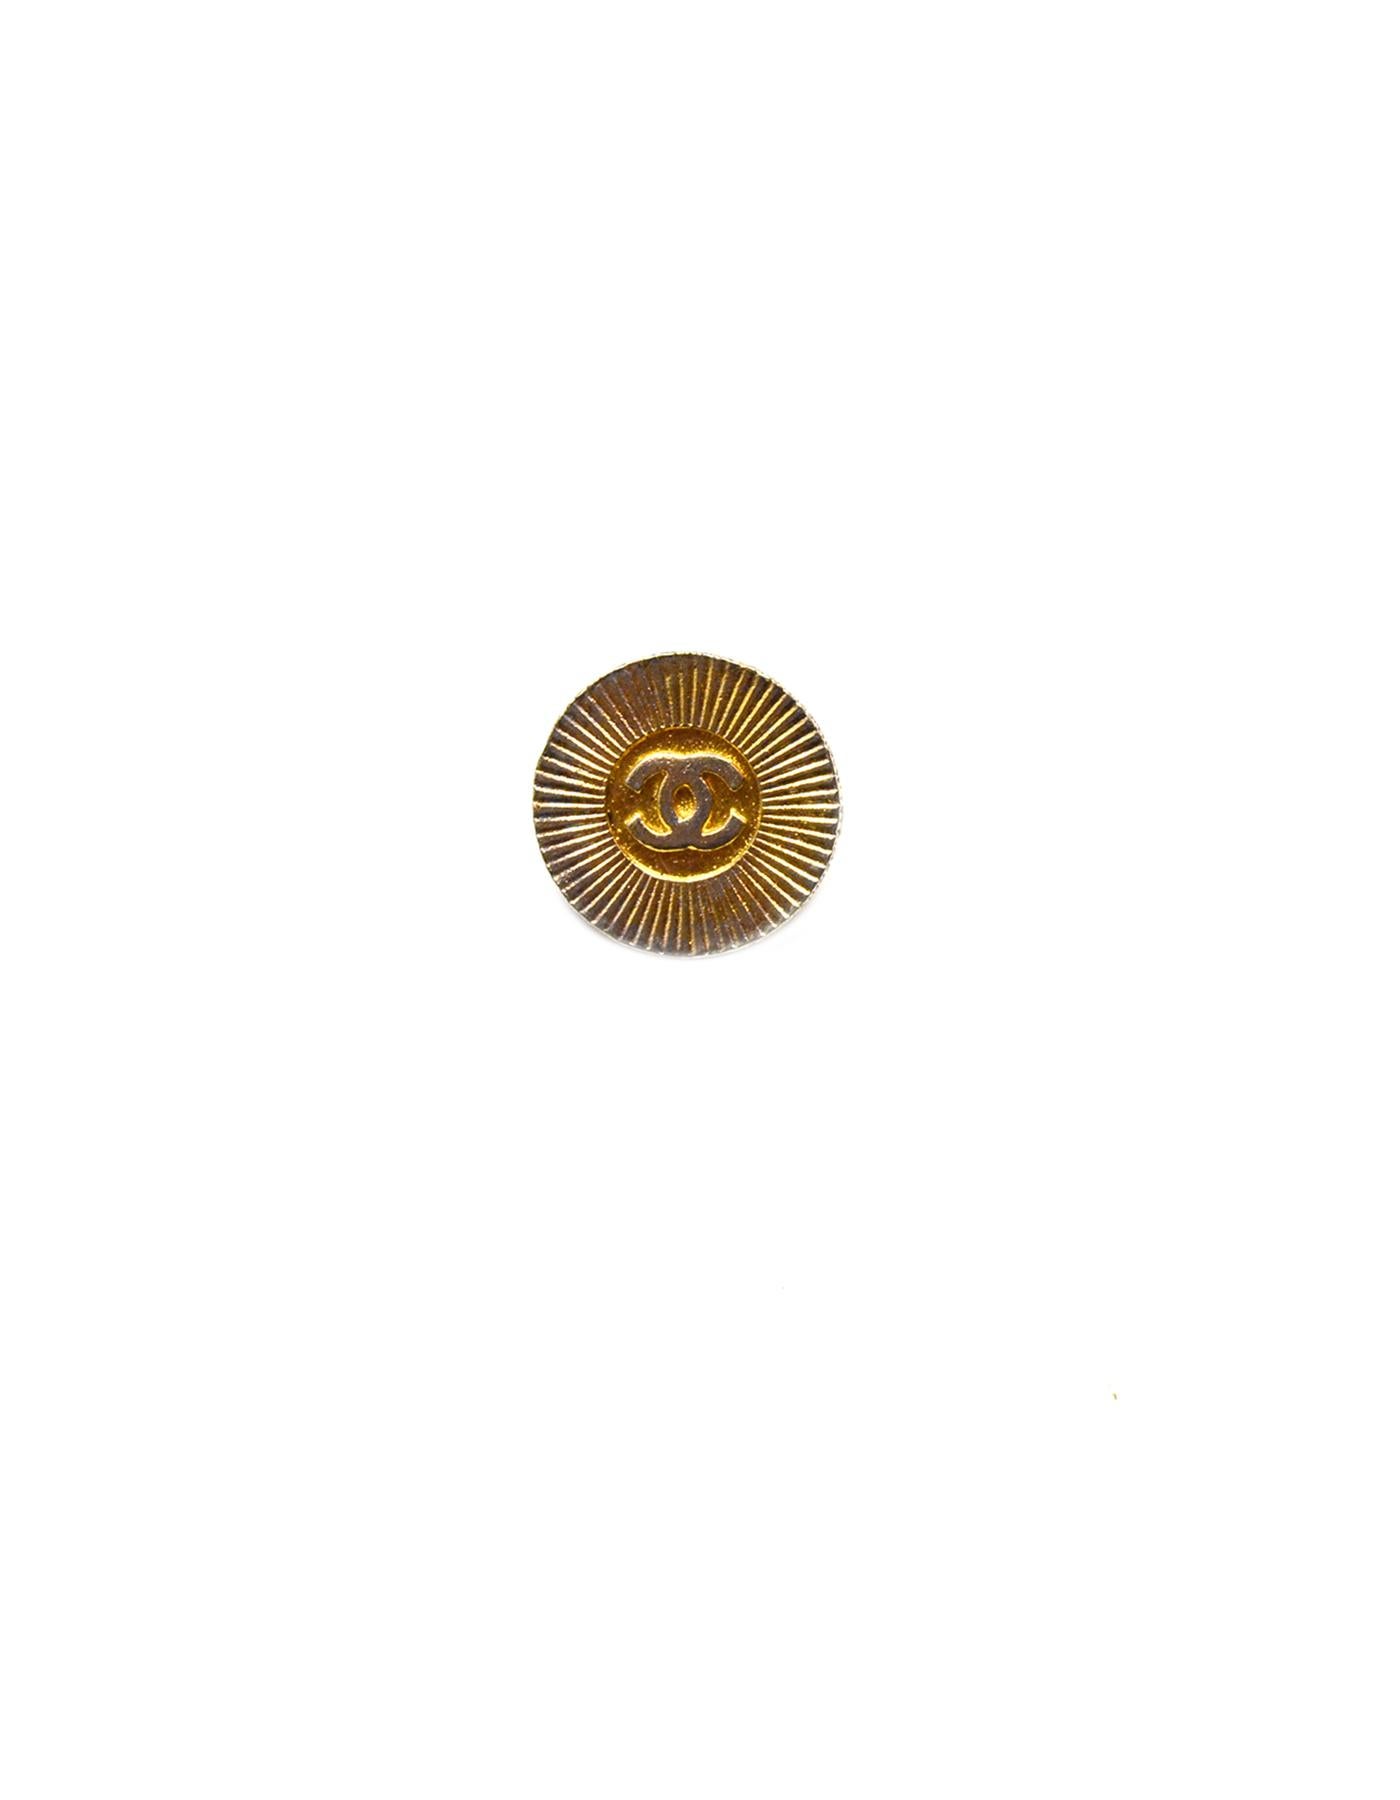 Chanel Goldtone CC Shank Buttons (Set of 7- 3 Small, 2 Medium, 2 Large)

Color: Goldtone
Materials:  Goldtone metal
Hallmarks: On back of large buttons- 